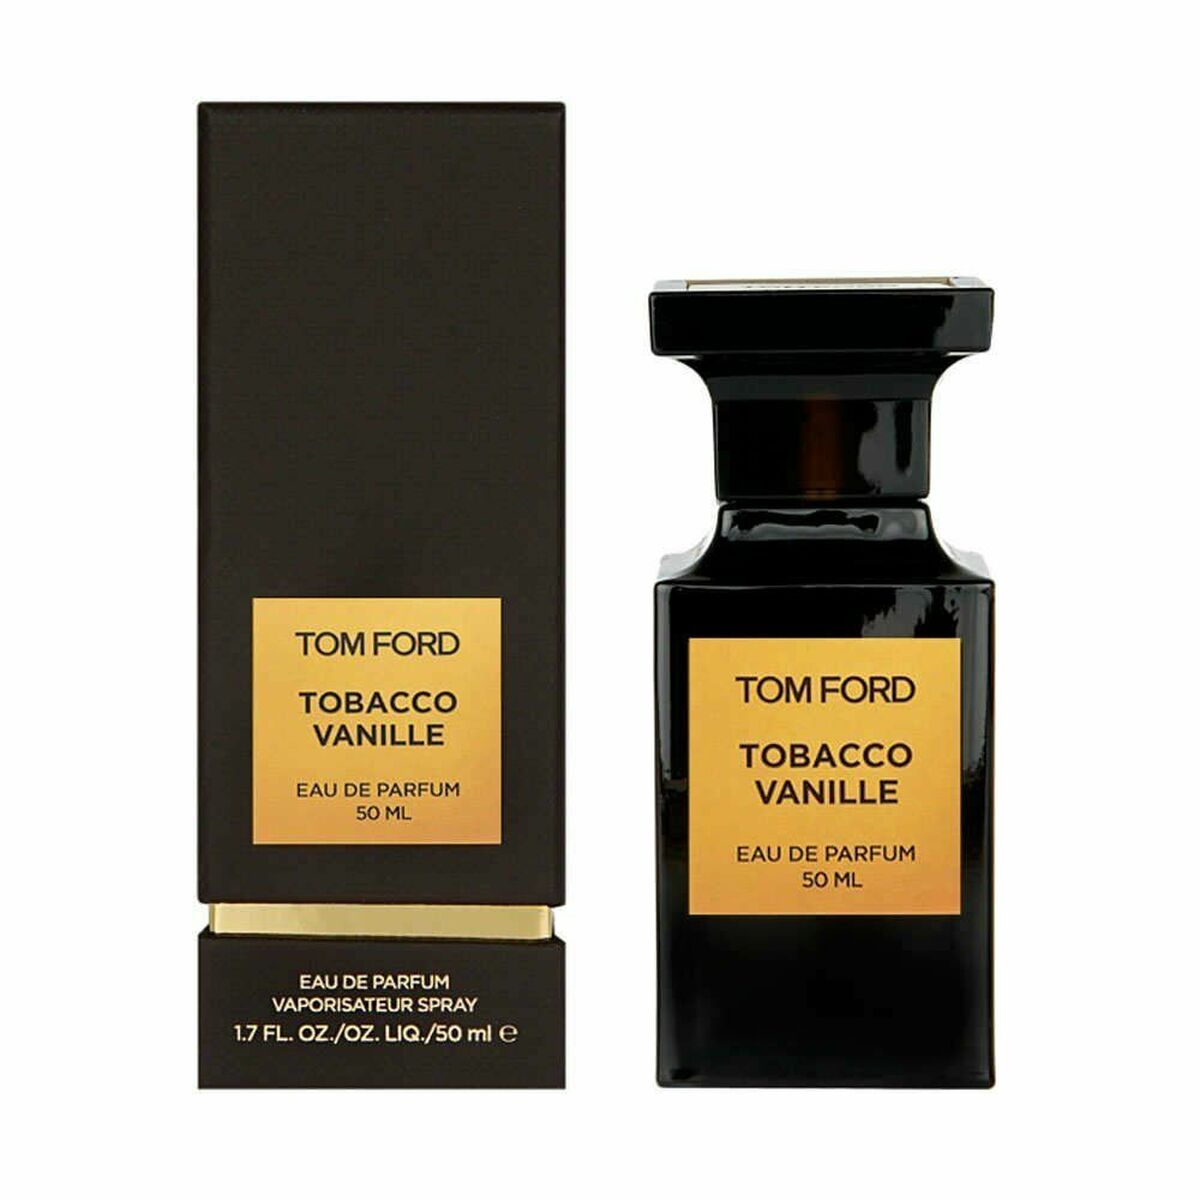 Kaufe Unisex-Parfüm Tom Ford Tobacco Vanille EDP (50 ml) bei AWK Flagship um € 225.00